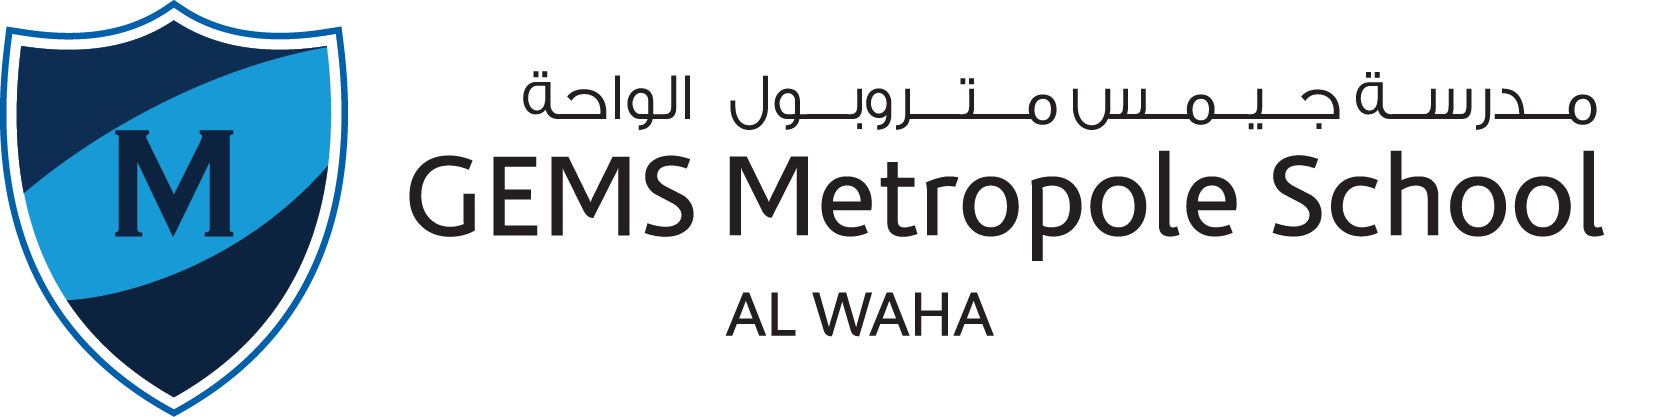 GEMS Metropole School - Al Waha